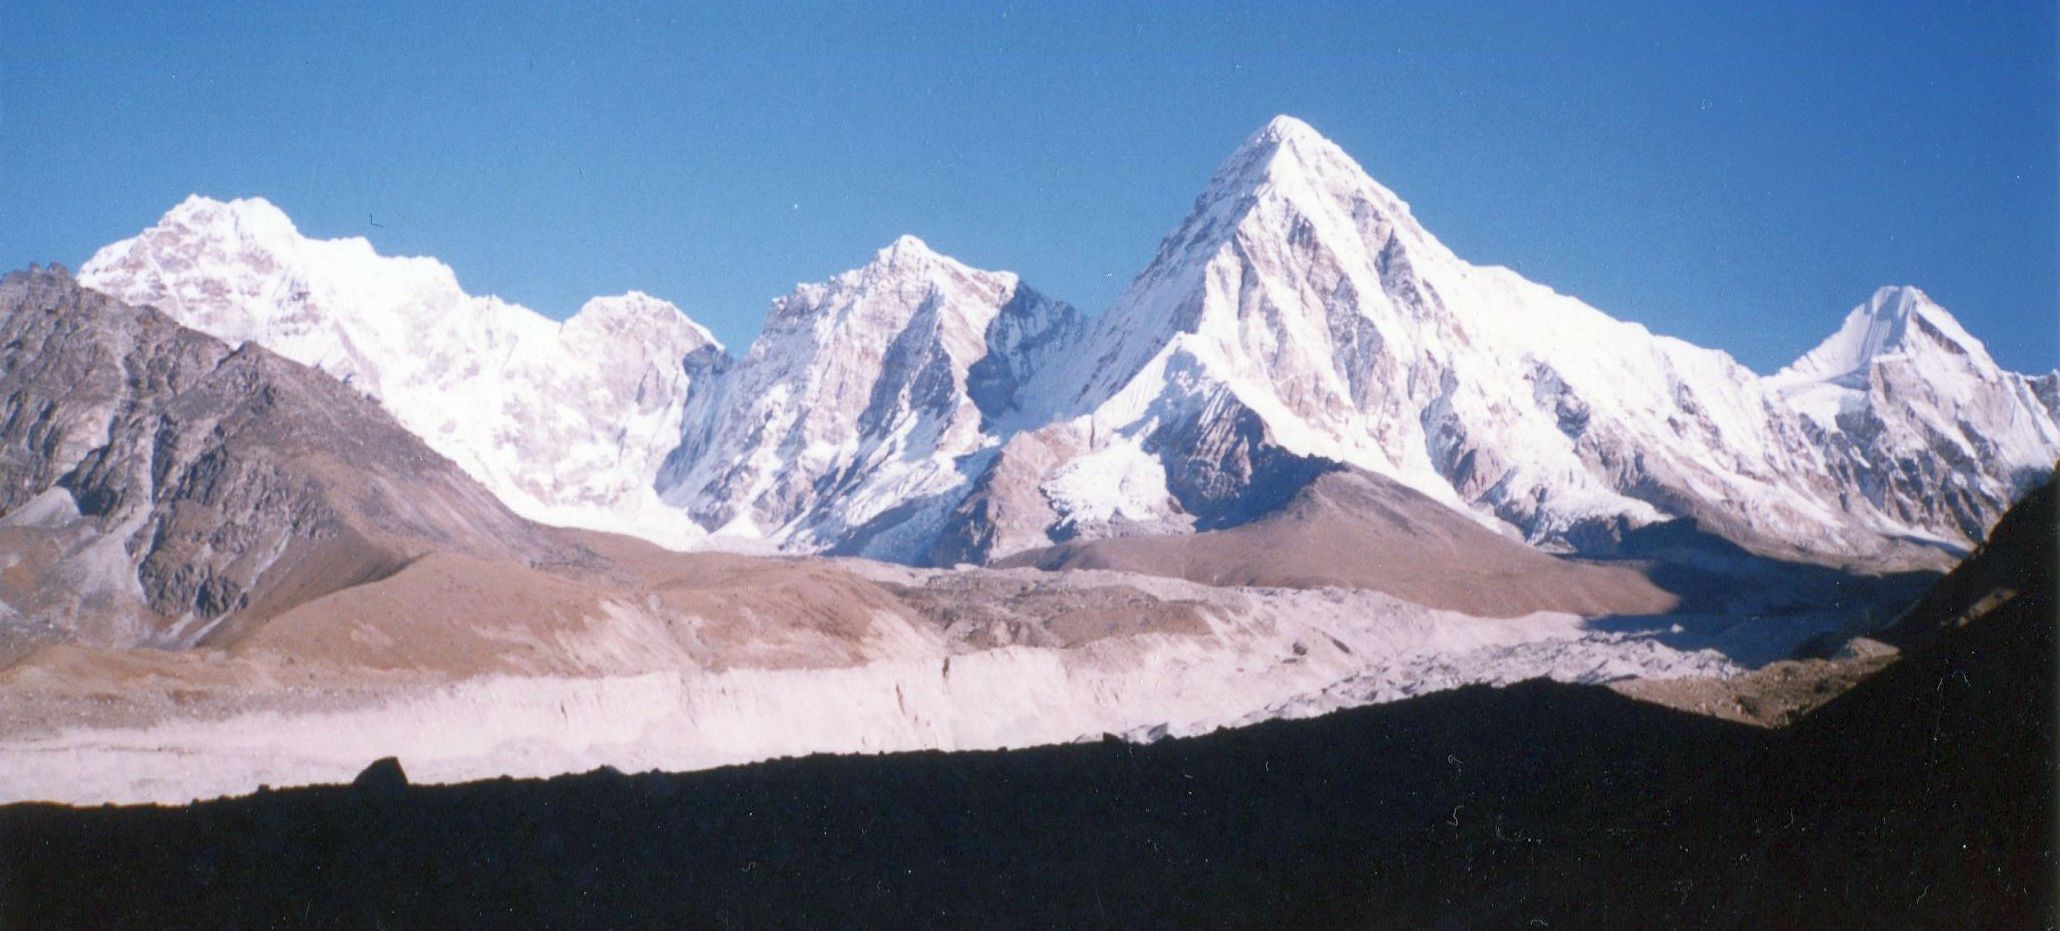 Mount Pumori and Khumbu Glacier